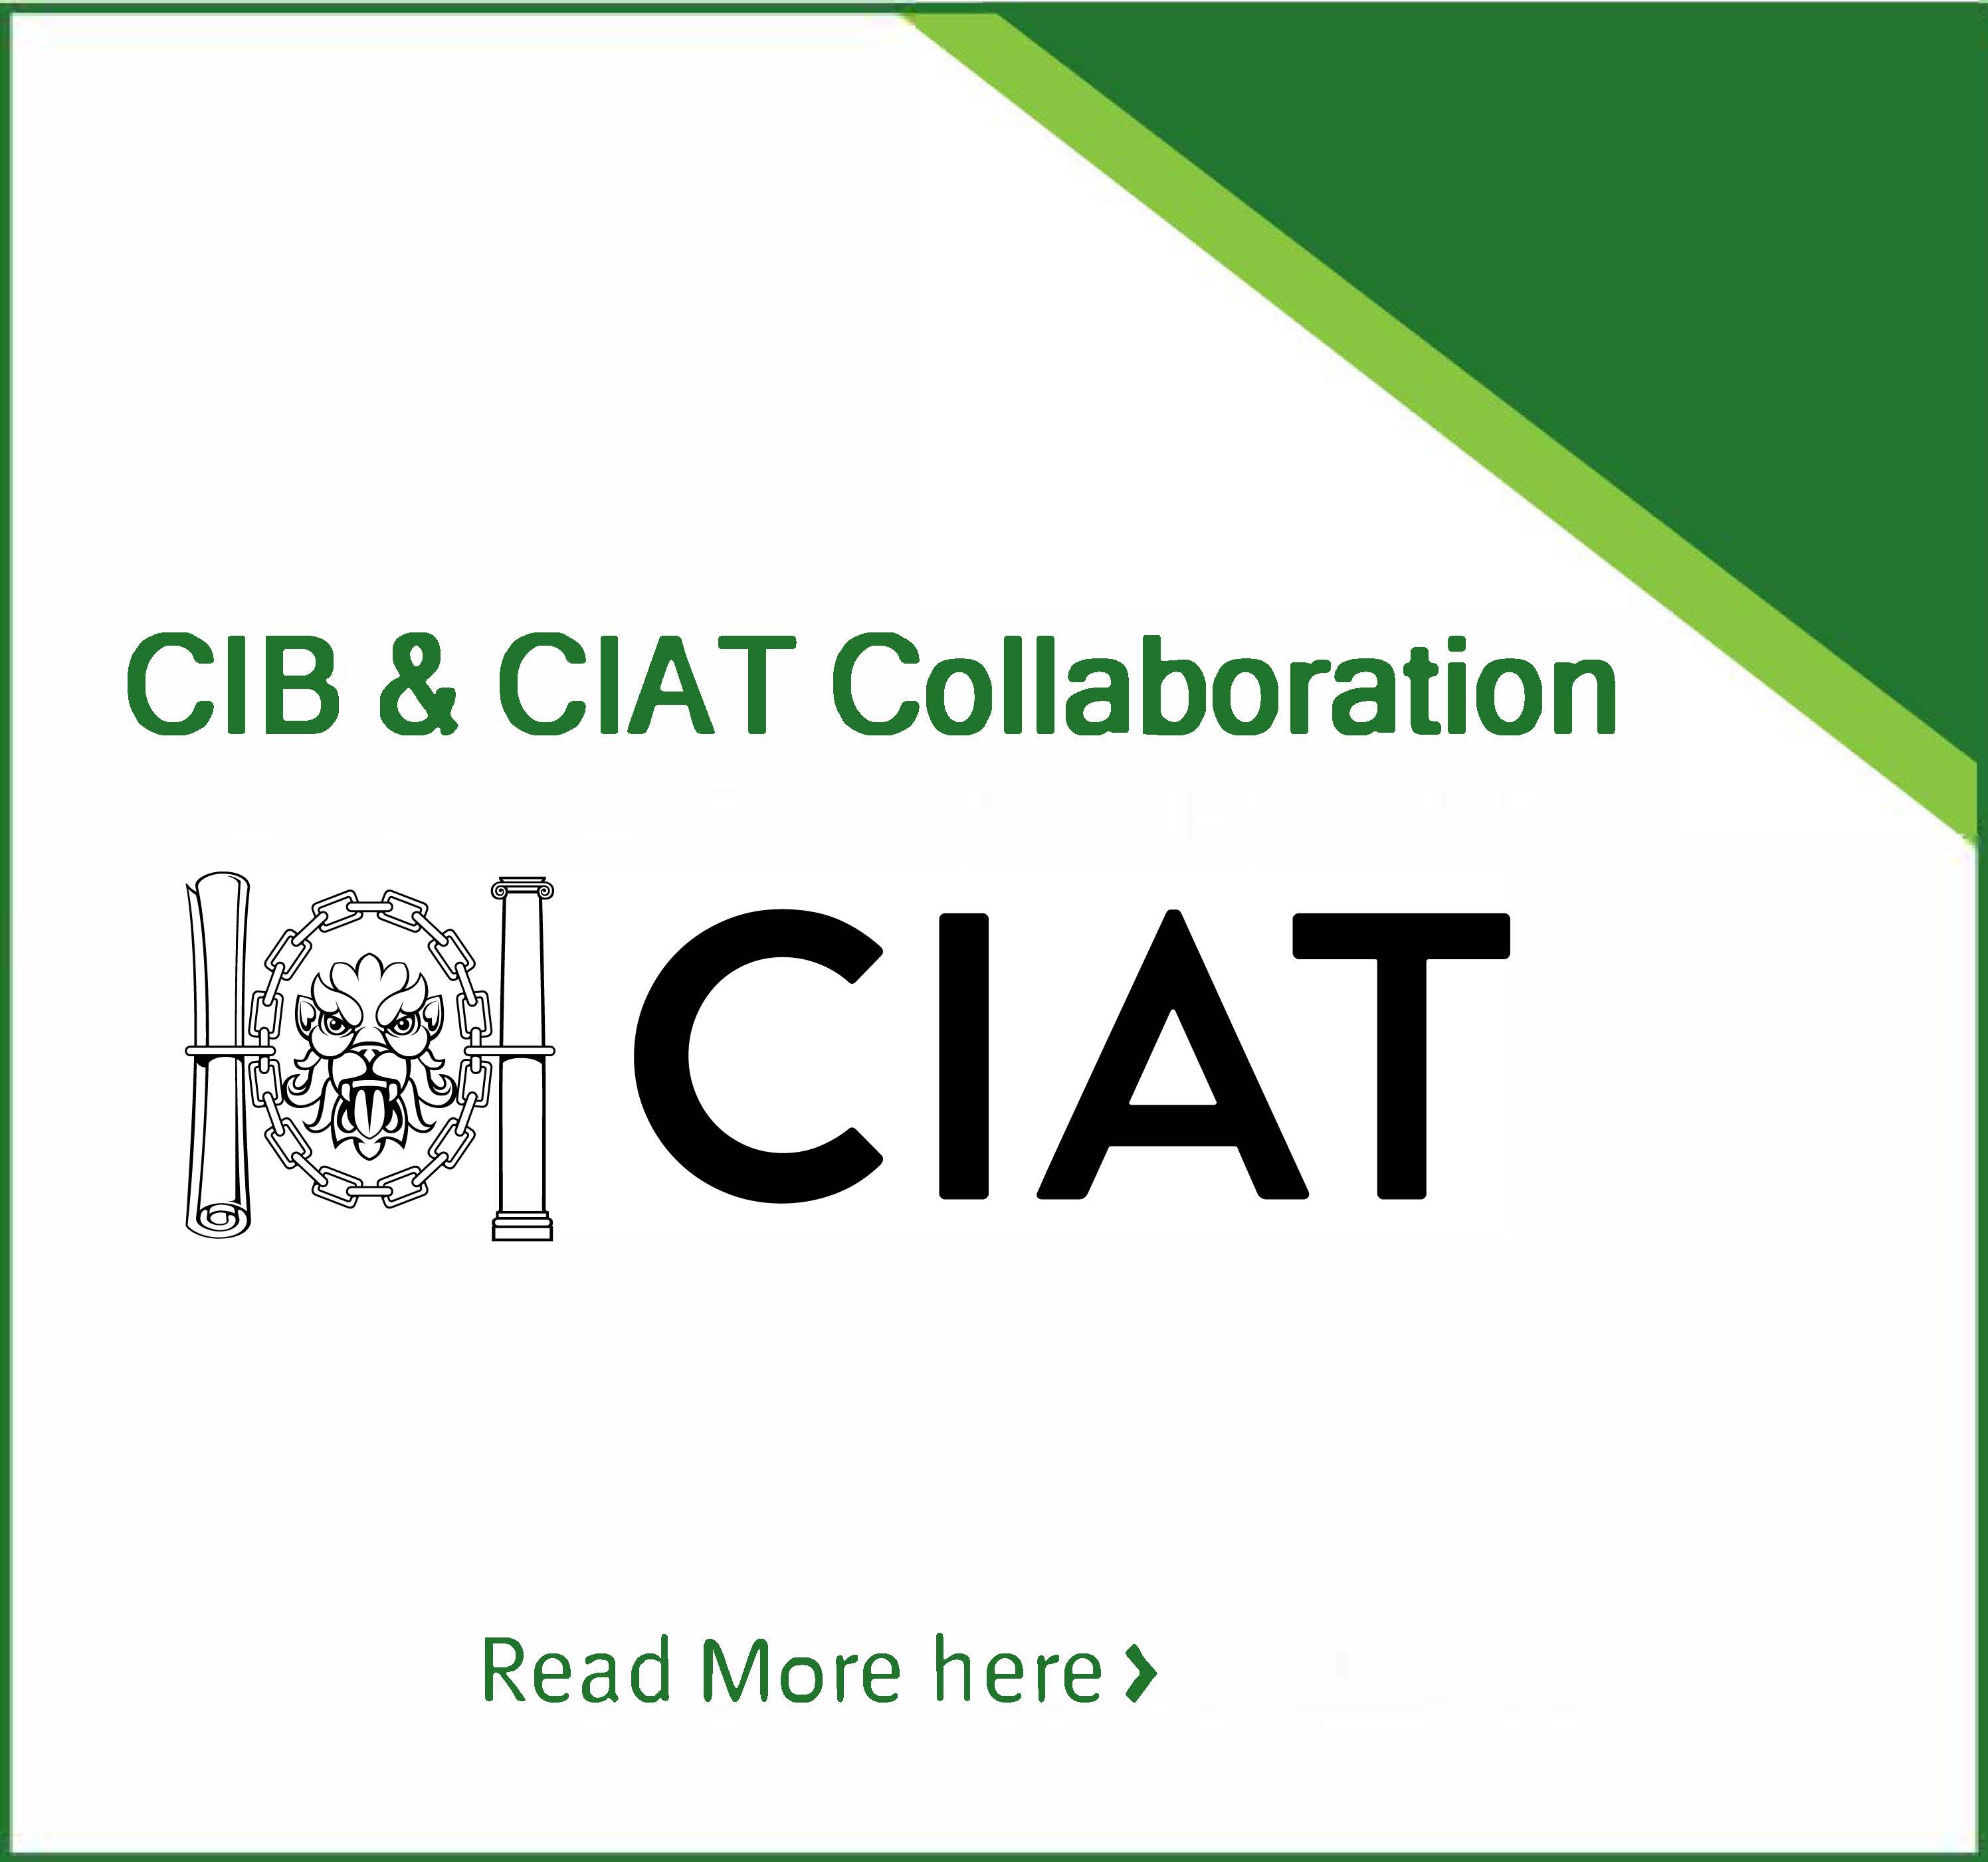 CIB & CIAT Collaboration